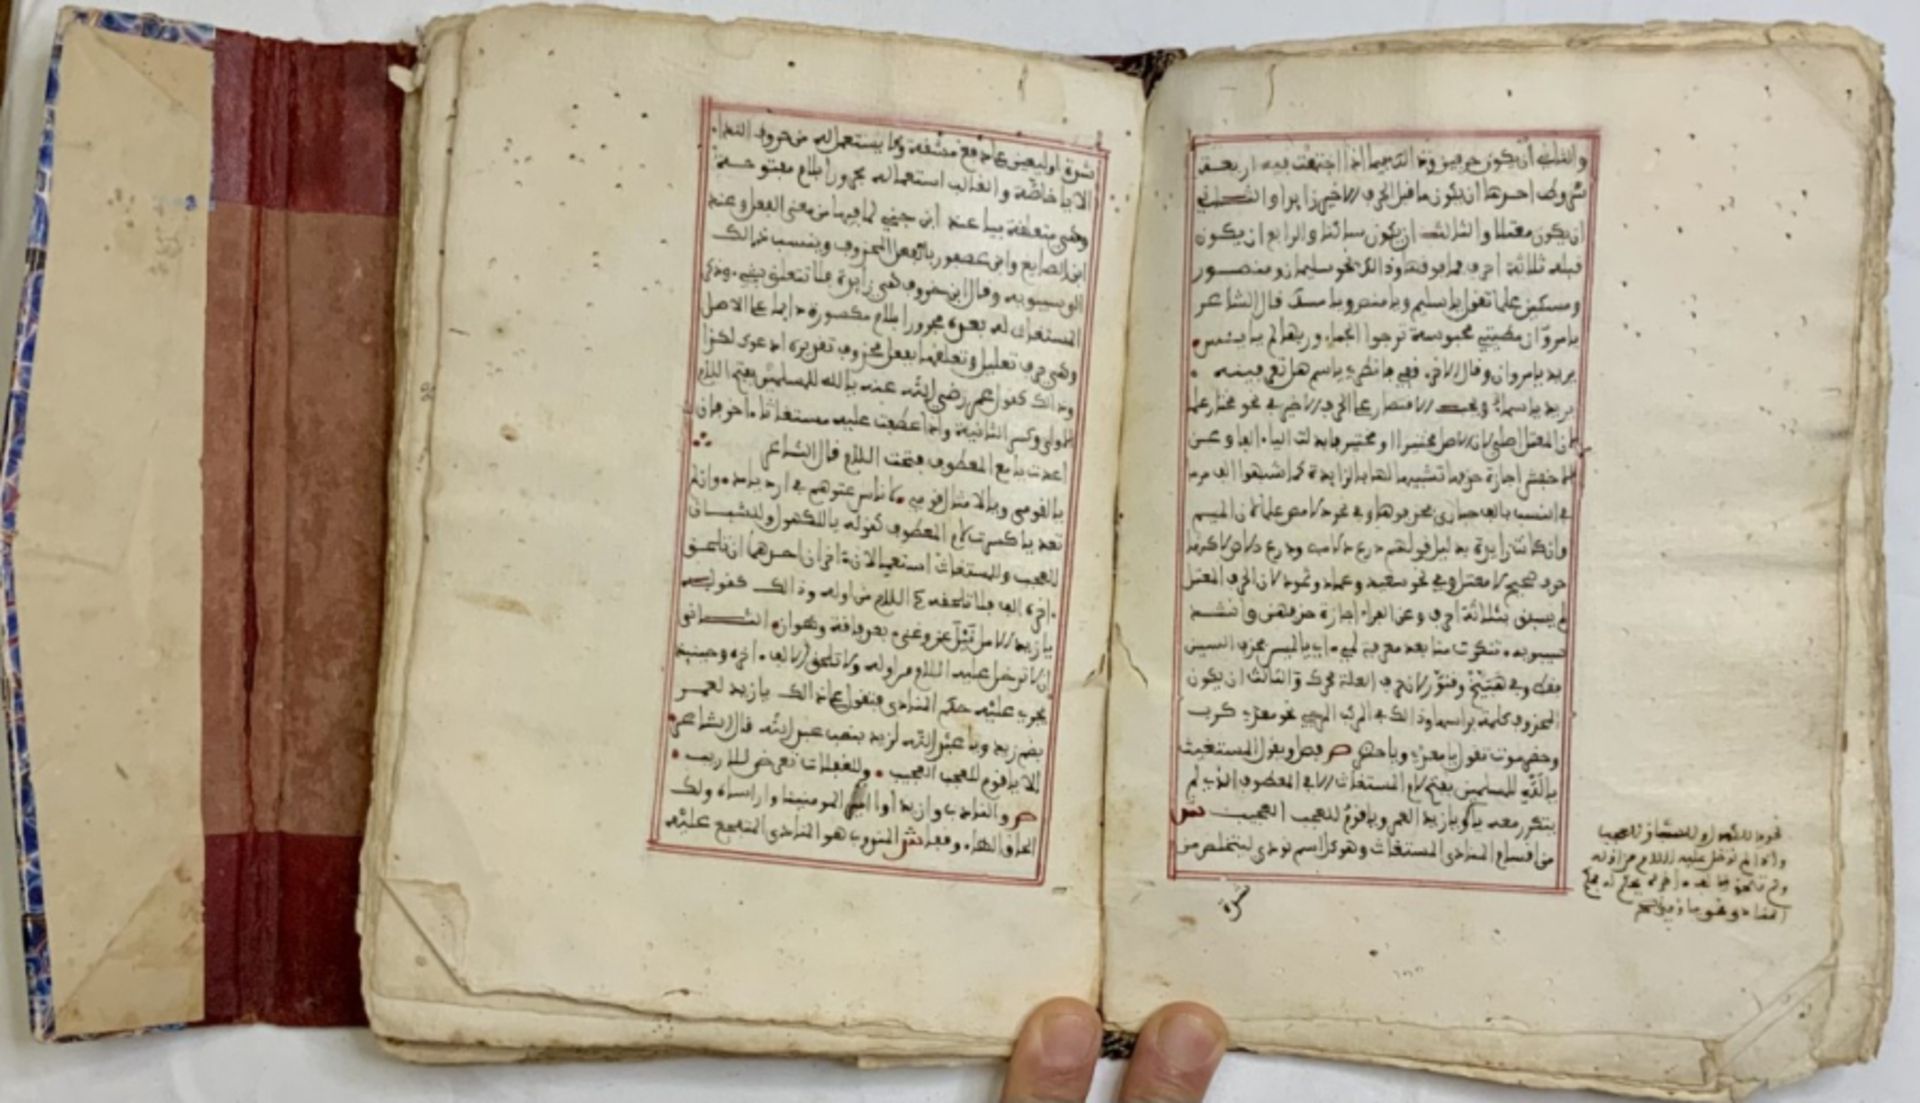 18th century Islamic manuscript on morphology and rhetoric - Image 6 of 18